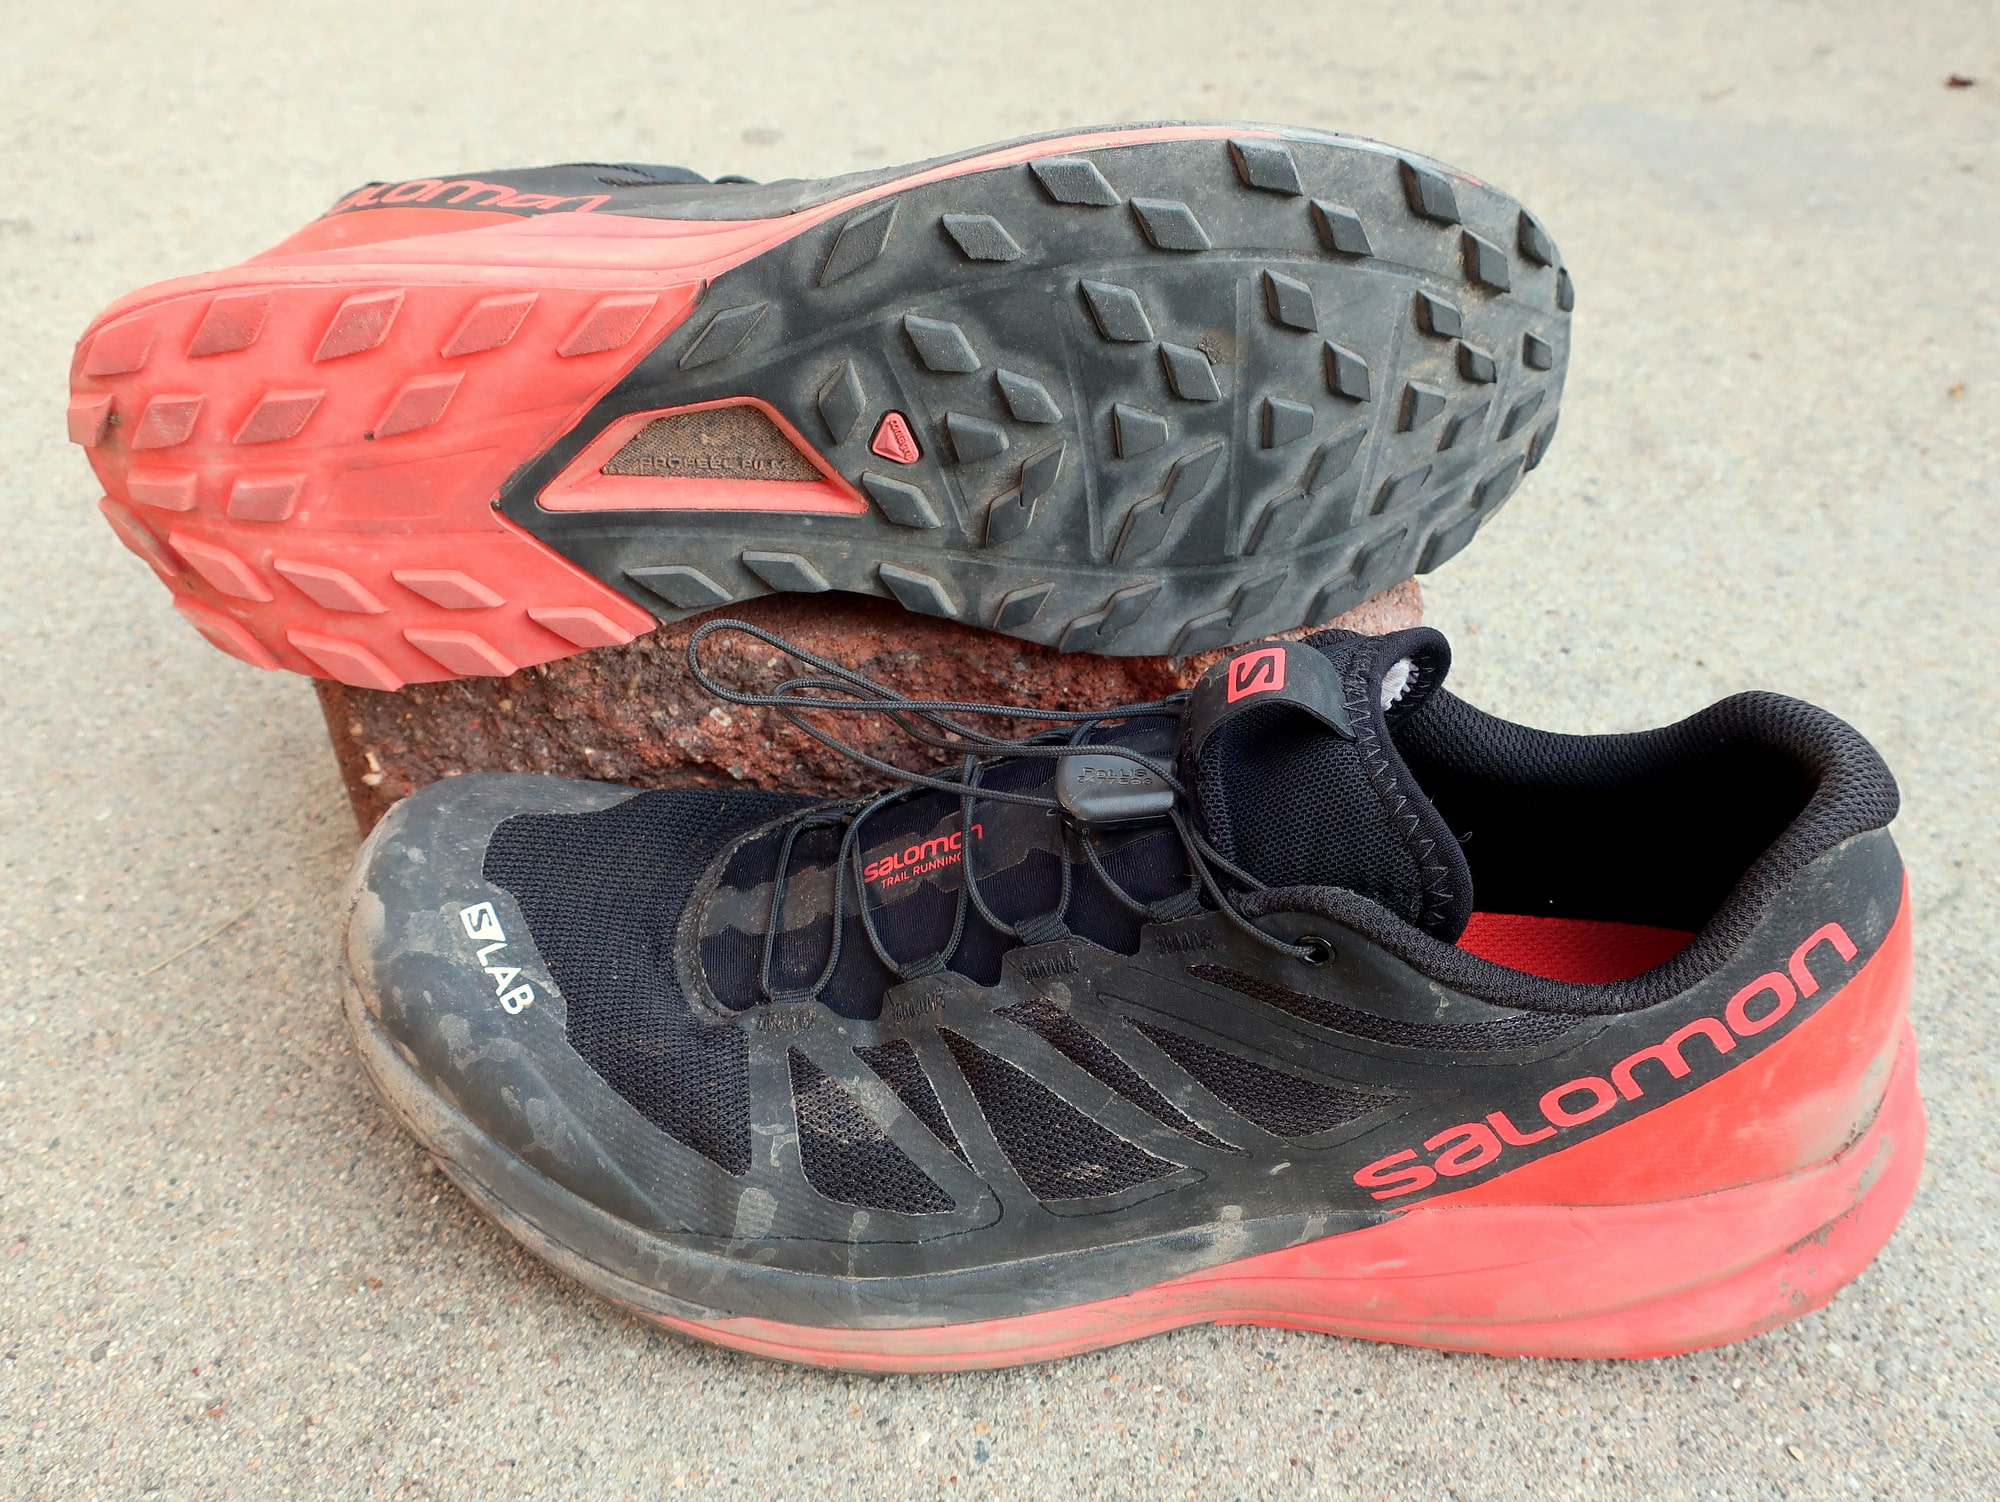 Review: Salomon Sense Ultra || All-purpose trail running shoe